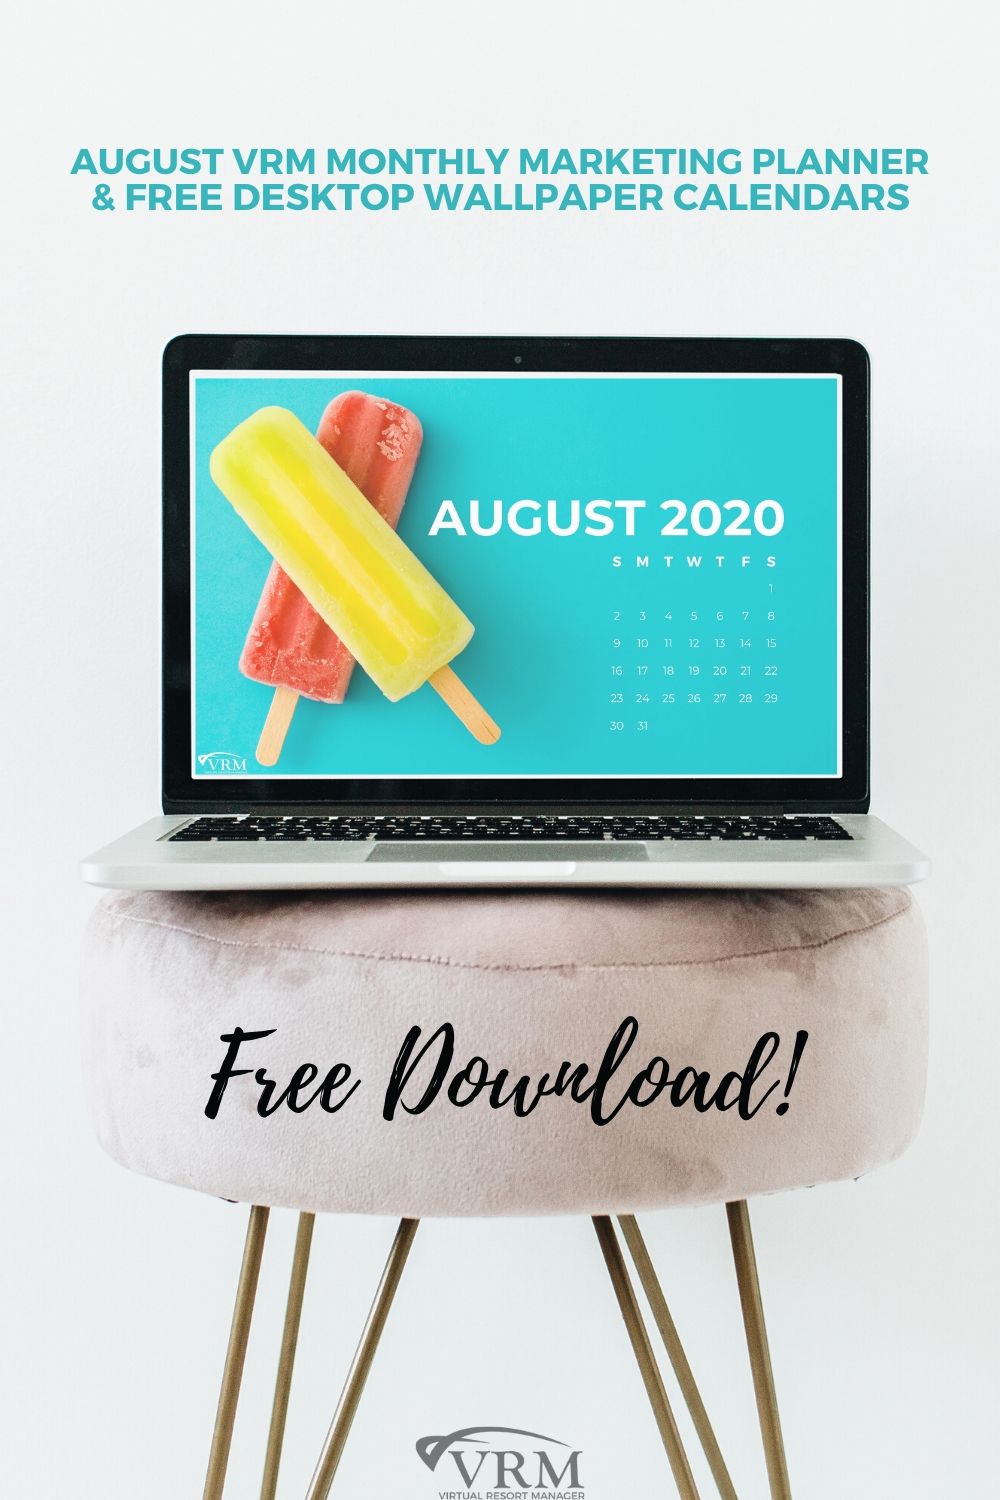 August VRM Monthly Marketing Planner and Free Desktop Wallpaper Calendars